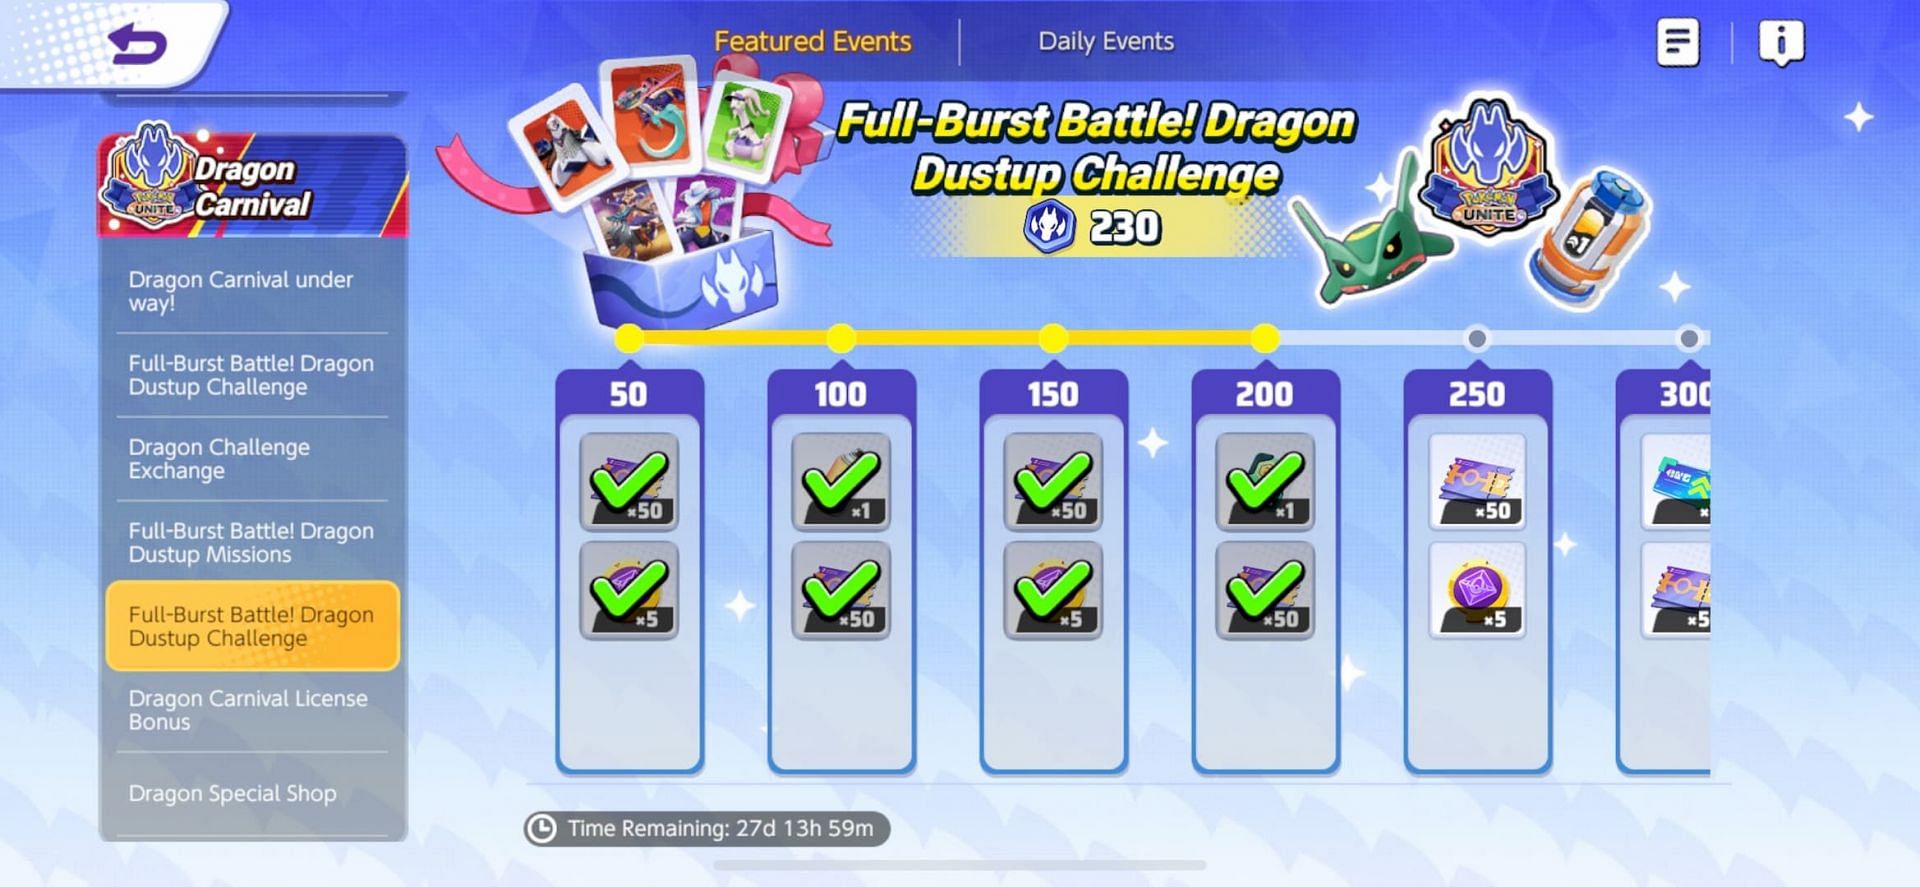 Full-burst Battle Dragon Dustup Challenge reward screen (Image via The Pokemon Company)